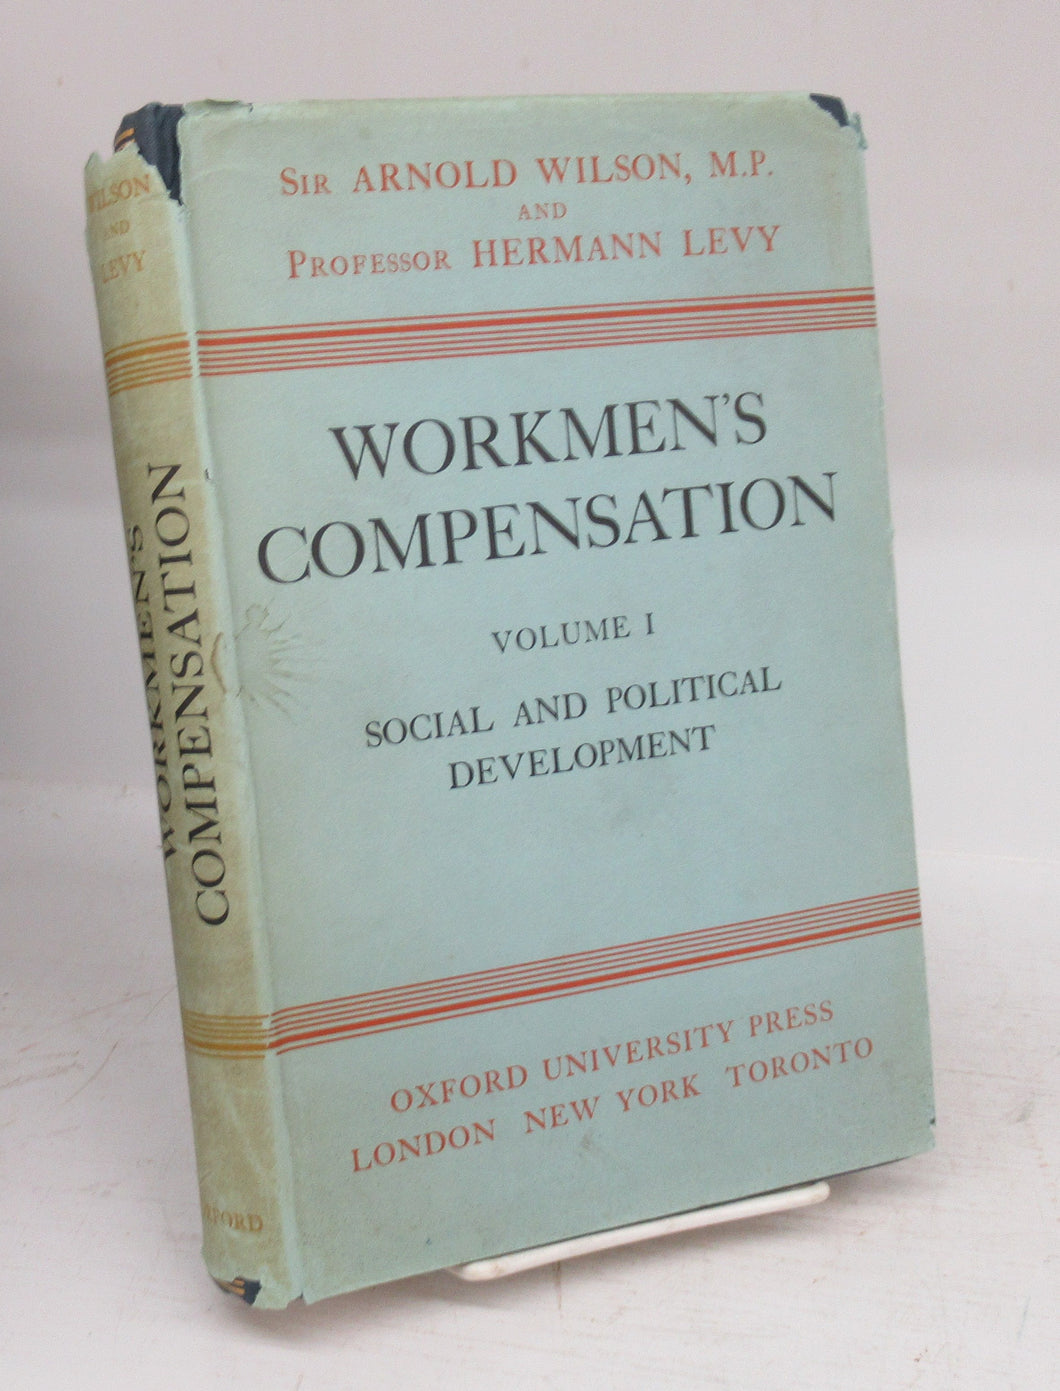 Workmen's Compensation Volume I: Social and Political Development